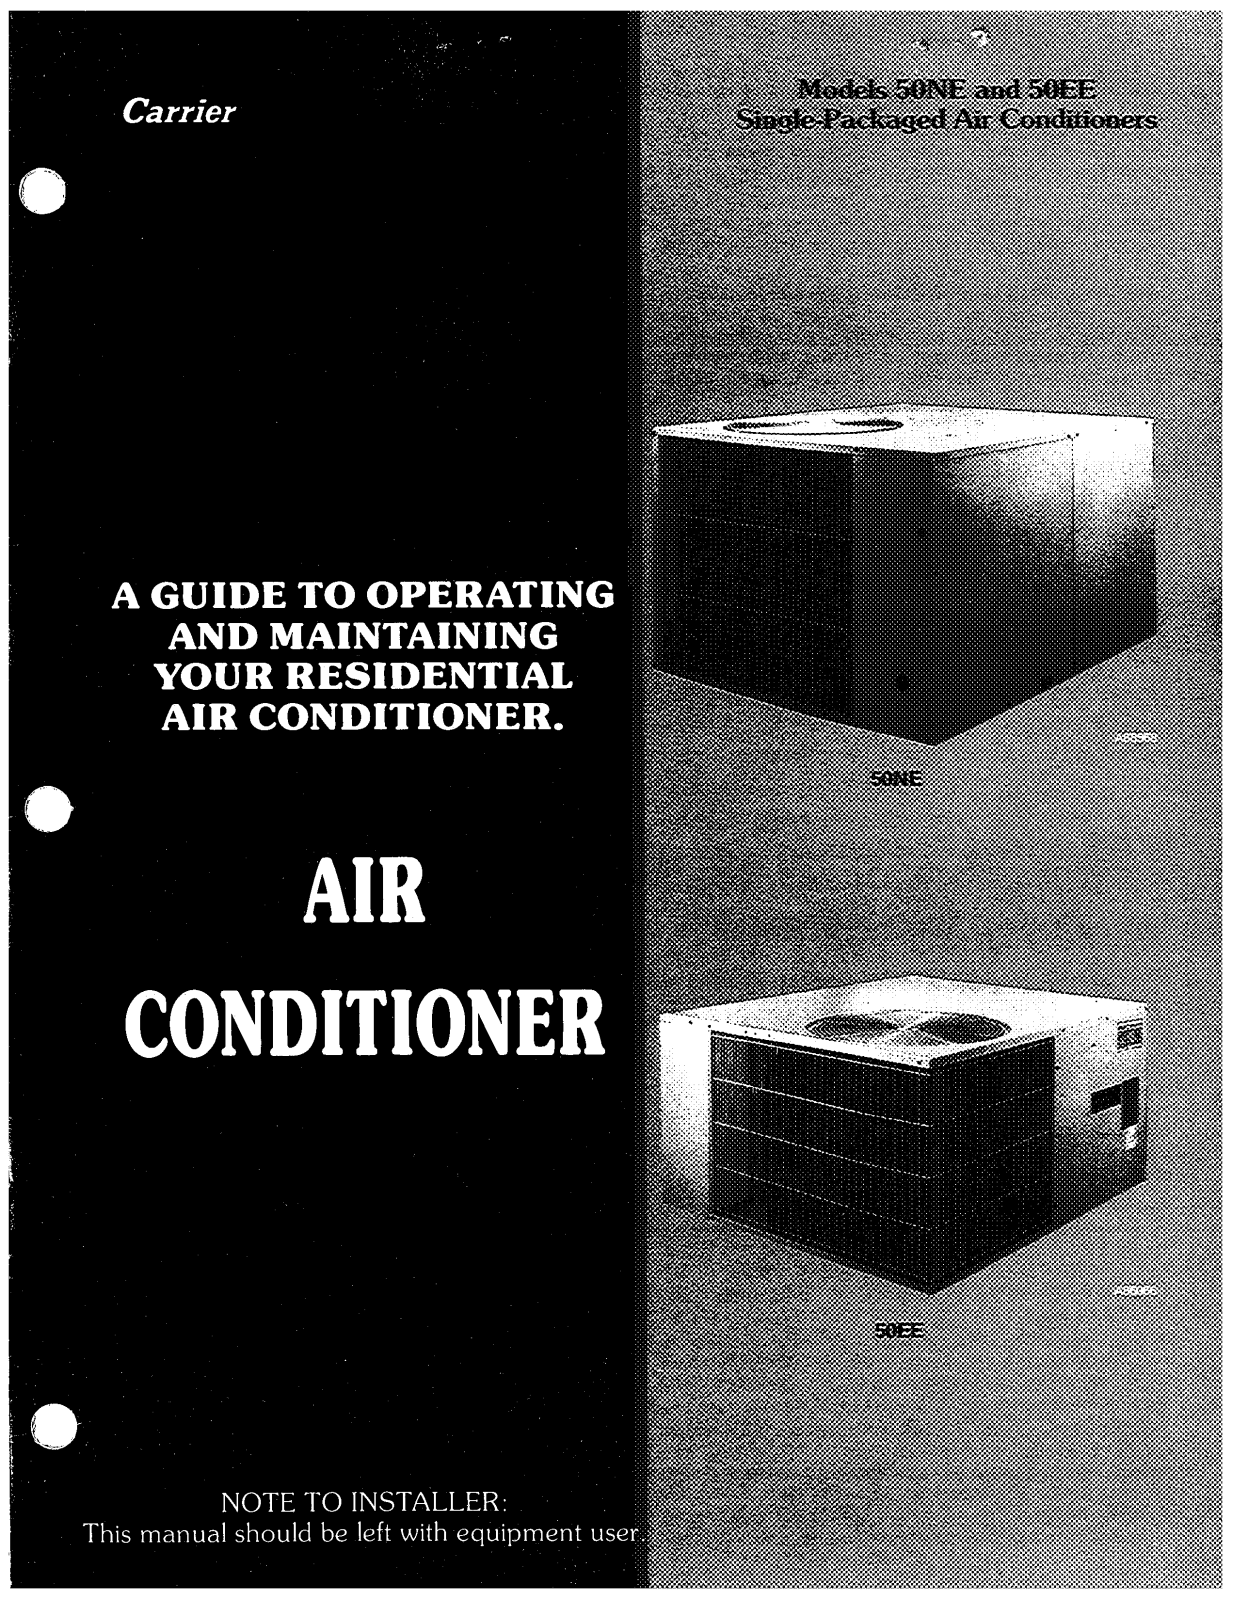 Carrier 50NE, 50EE User Manual